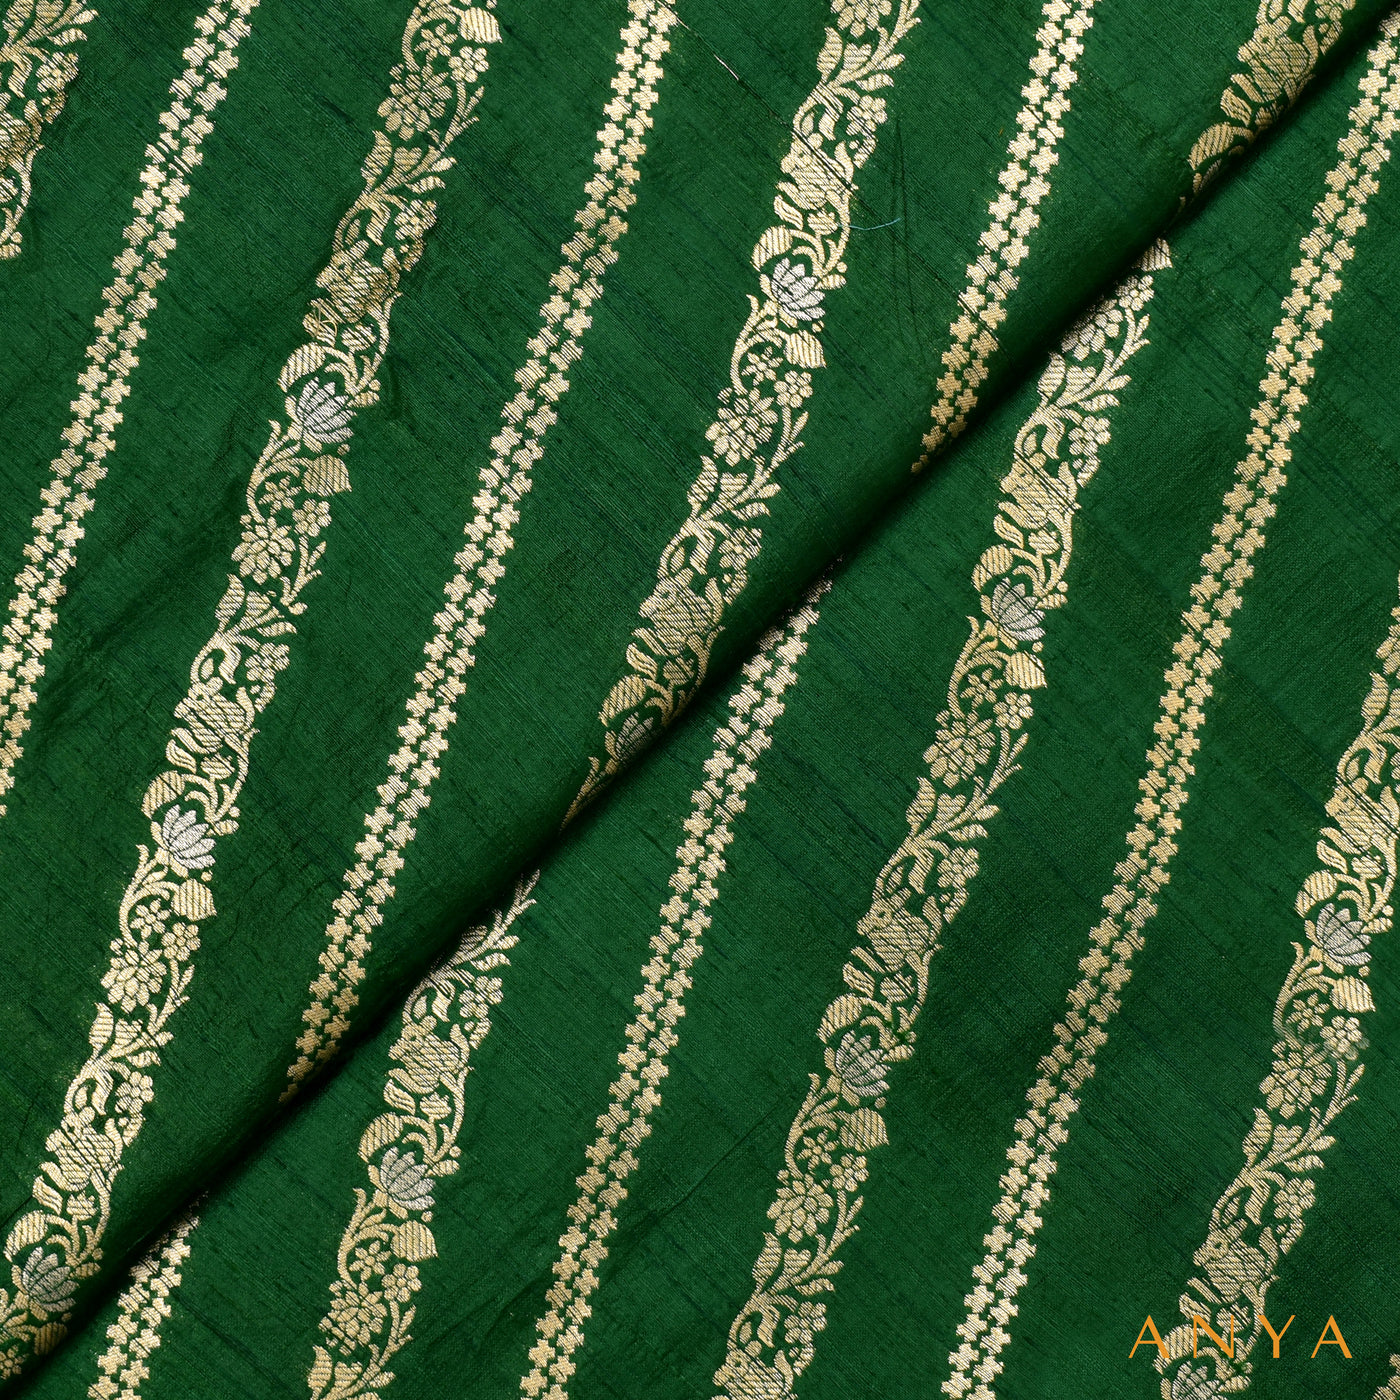 Bottle Green Banarasi Silk Fabric with Cross Stripes Design